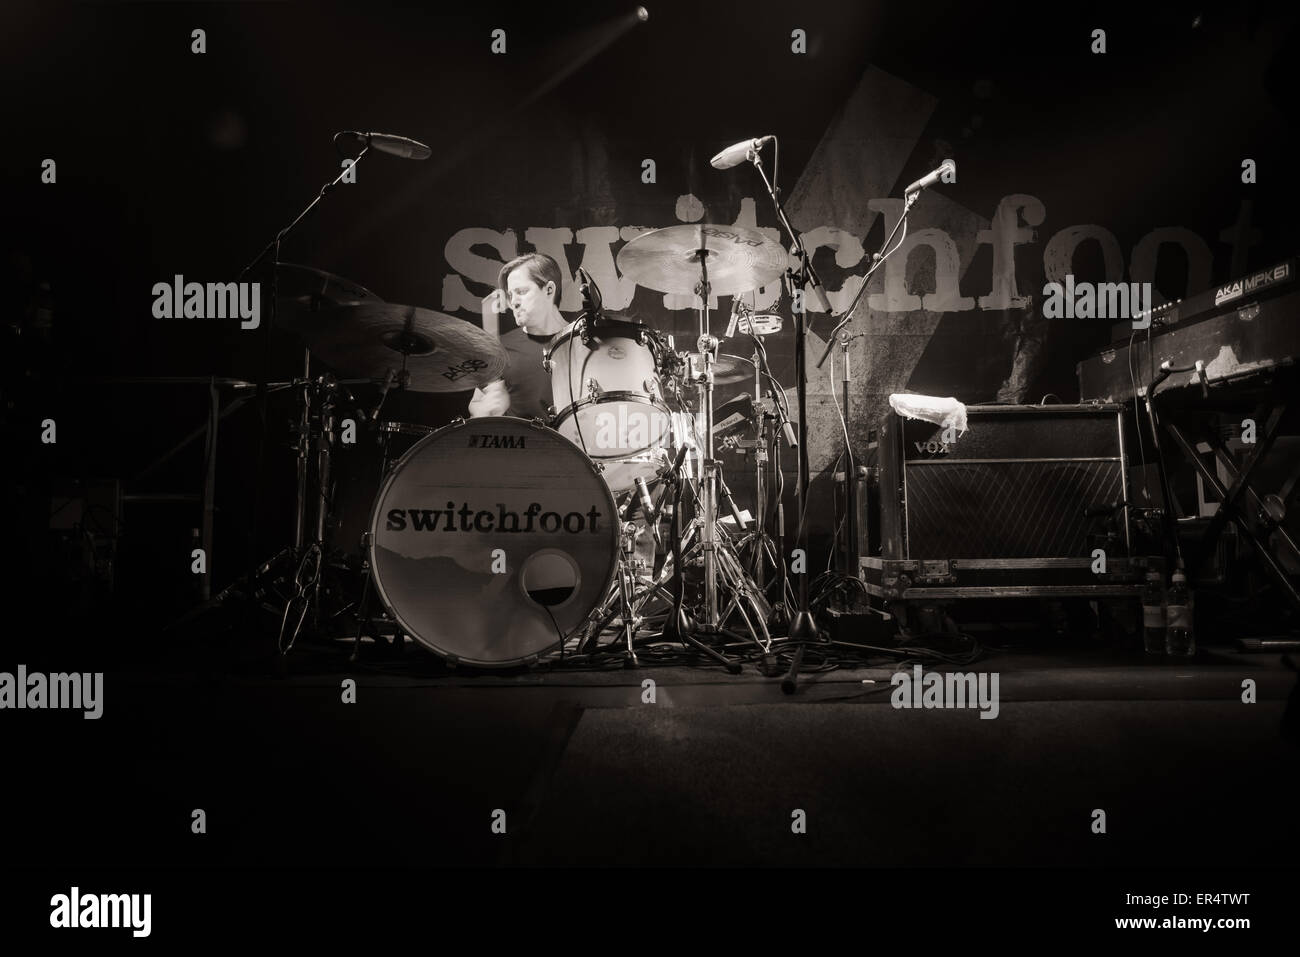 Switchfoot playing the Liquid Rooms Edinburgh 2015 Stock Photo